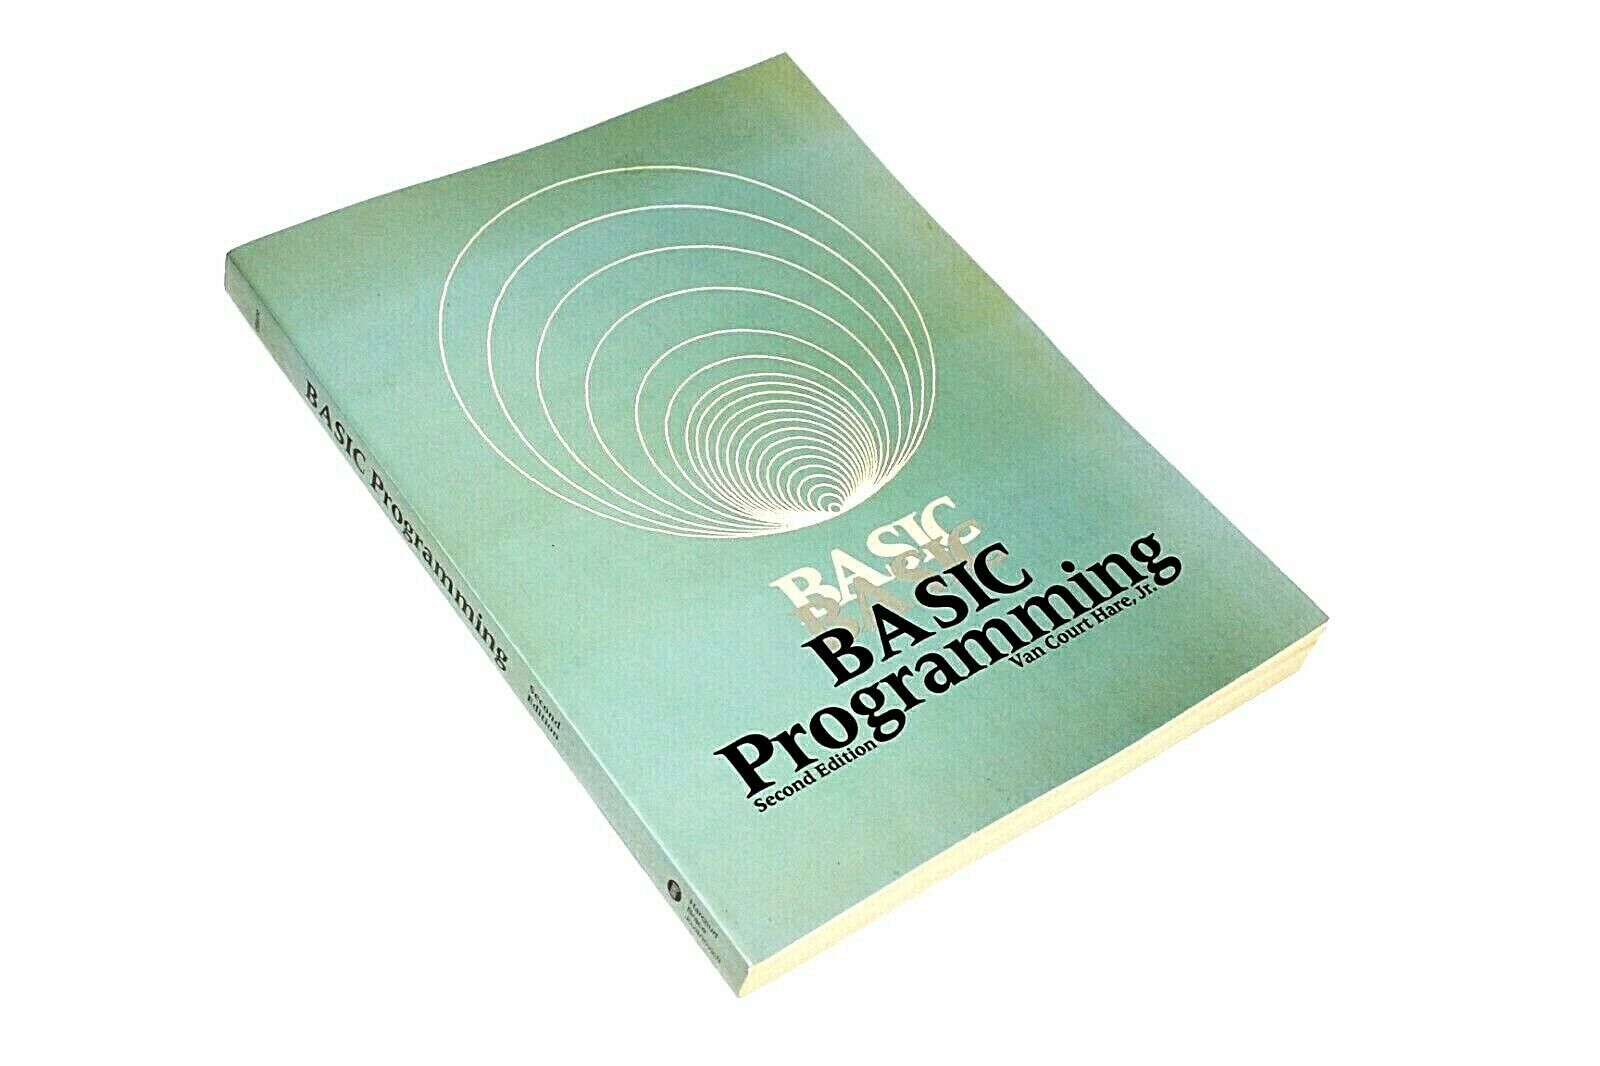 BASIC Programming by Van Court Hare Jr. 2nd Ed. 1982 Vintage Computers Computing